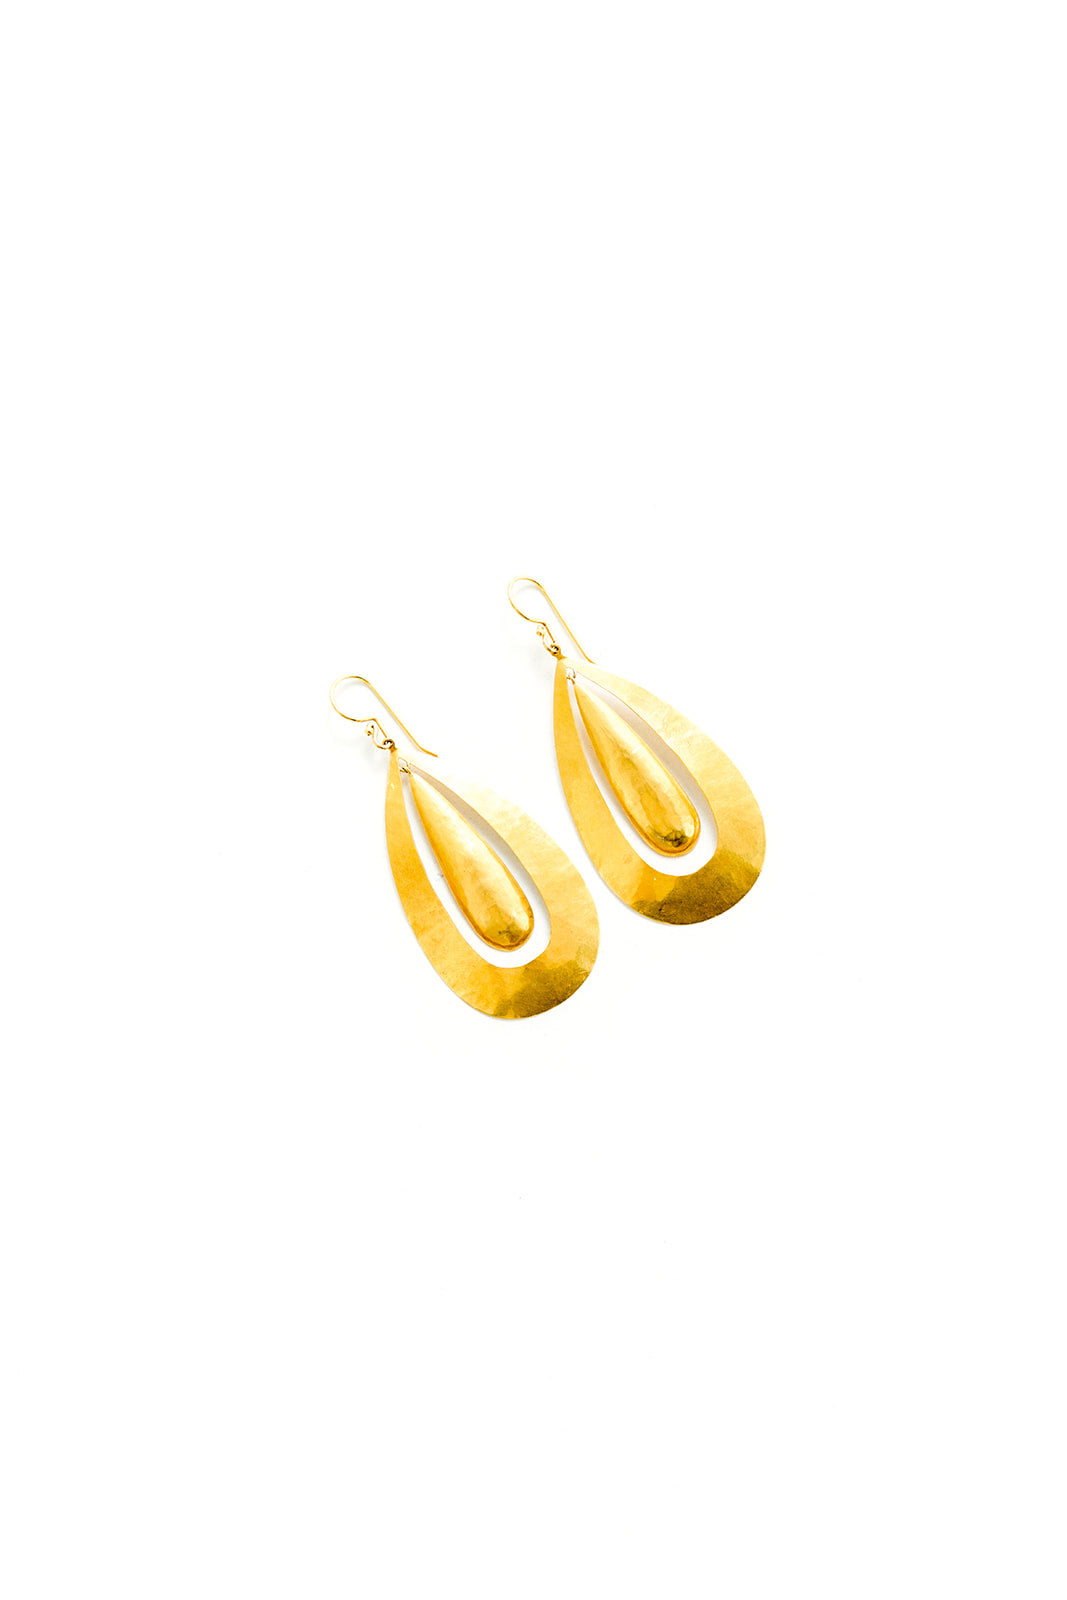 22K Yellow Gold Large Sheet Double Oval Earrings